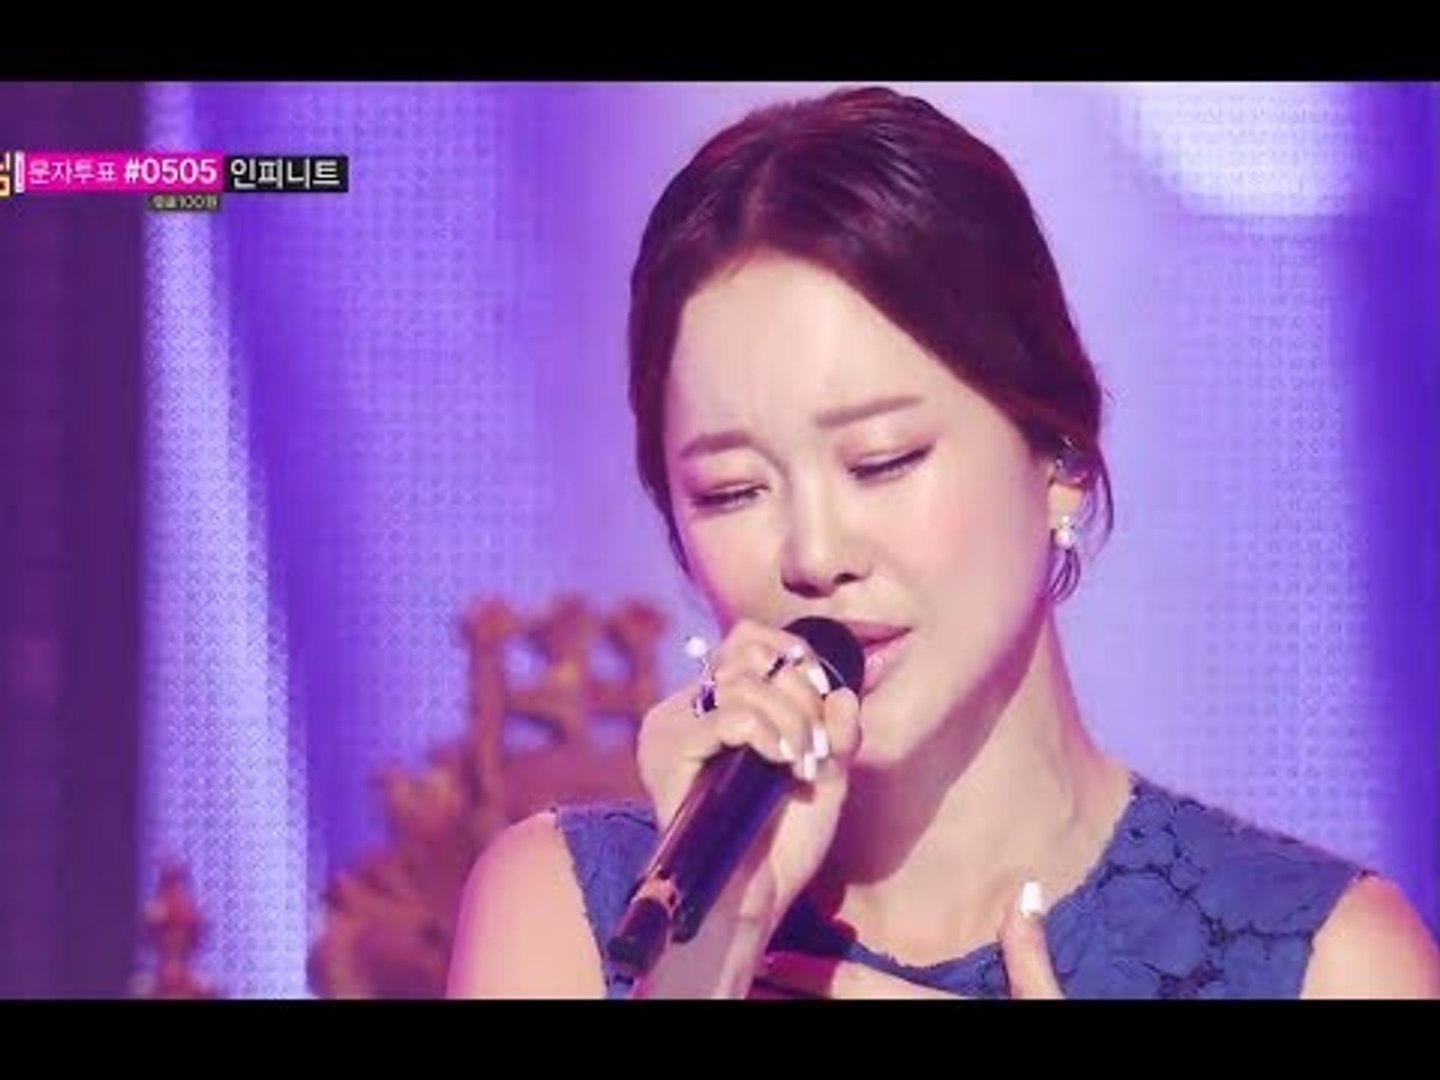 ⁣[Comeback Stage] Baek Ji-young - Still in Love, 백지영 - 여전히 뜨겁게, Show Music core 20140531